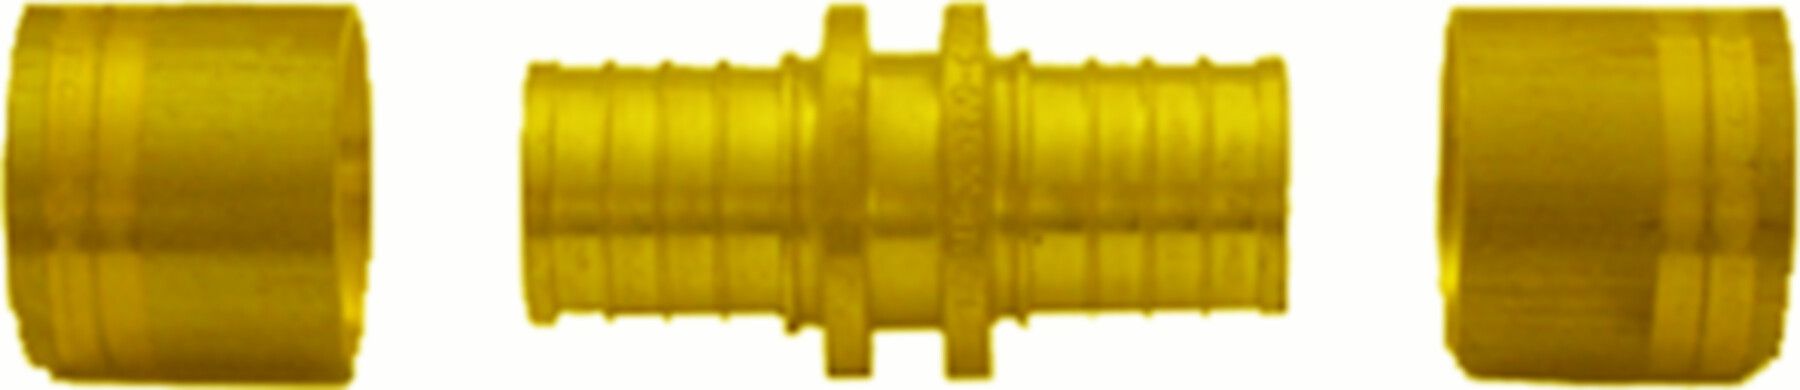 Press-Verbindungskupplung PVK egal S - 40 ø 40/5.5 mm - Isopex Fernwärmeleitung